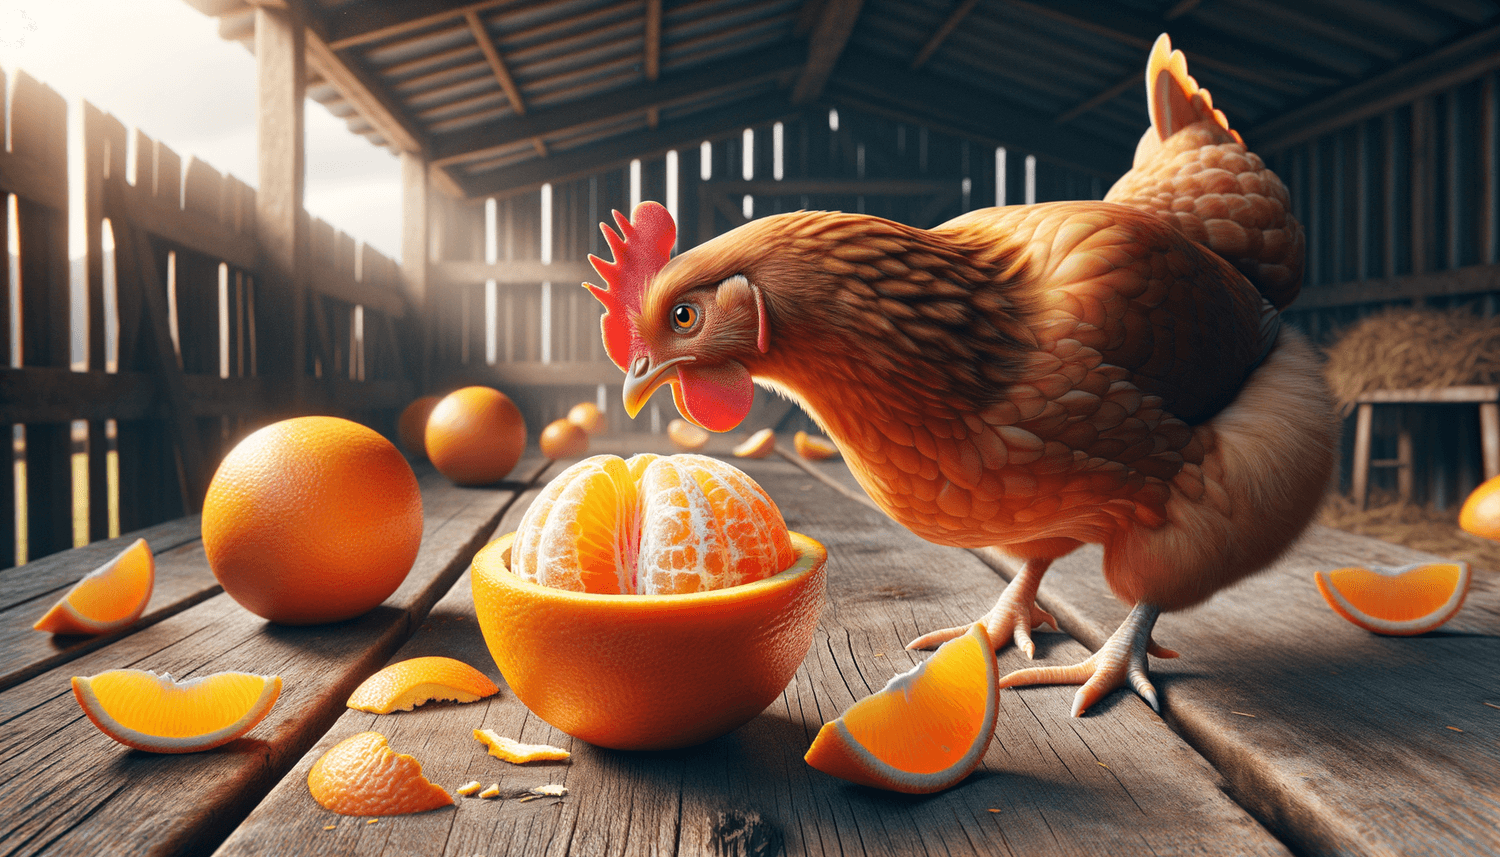 Can Chickens Eat Orange Peel?